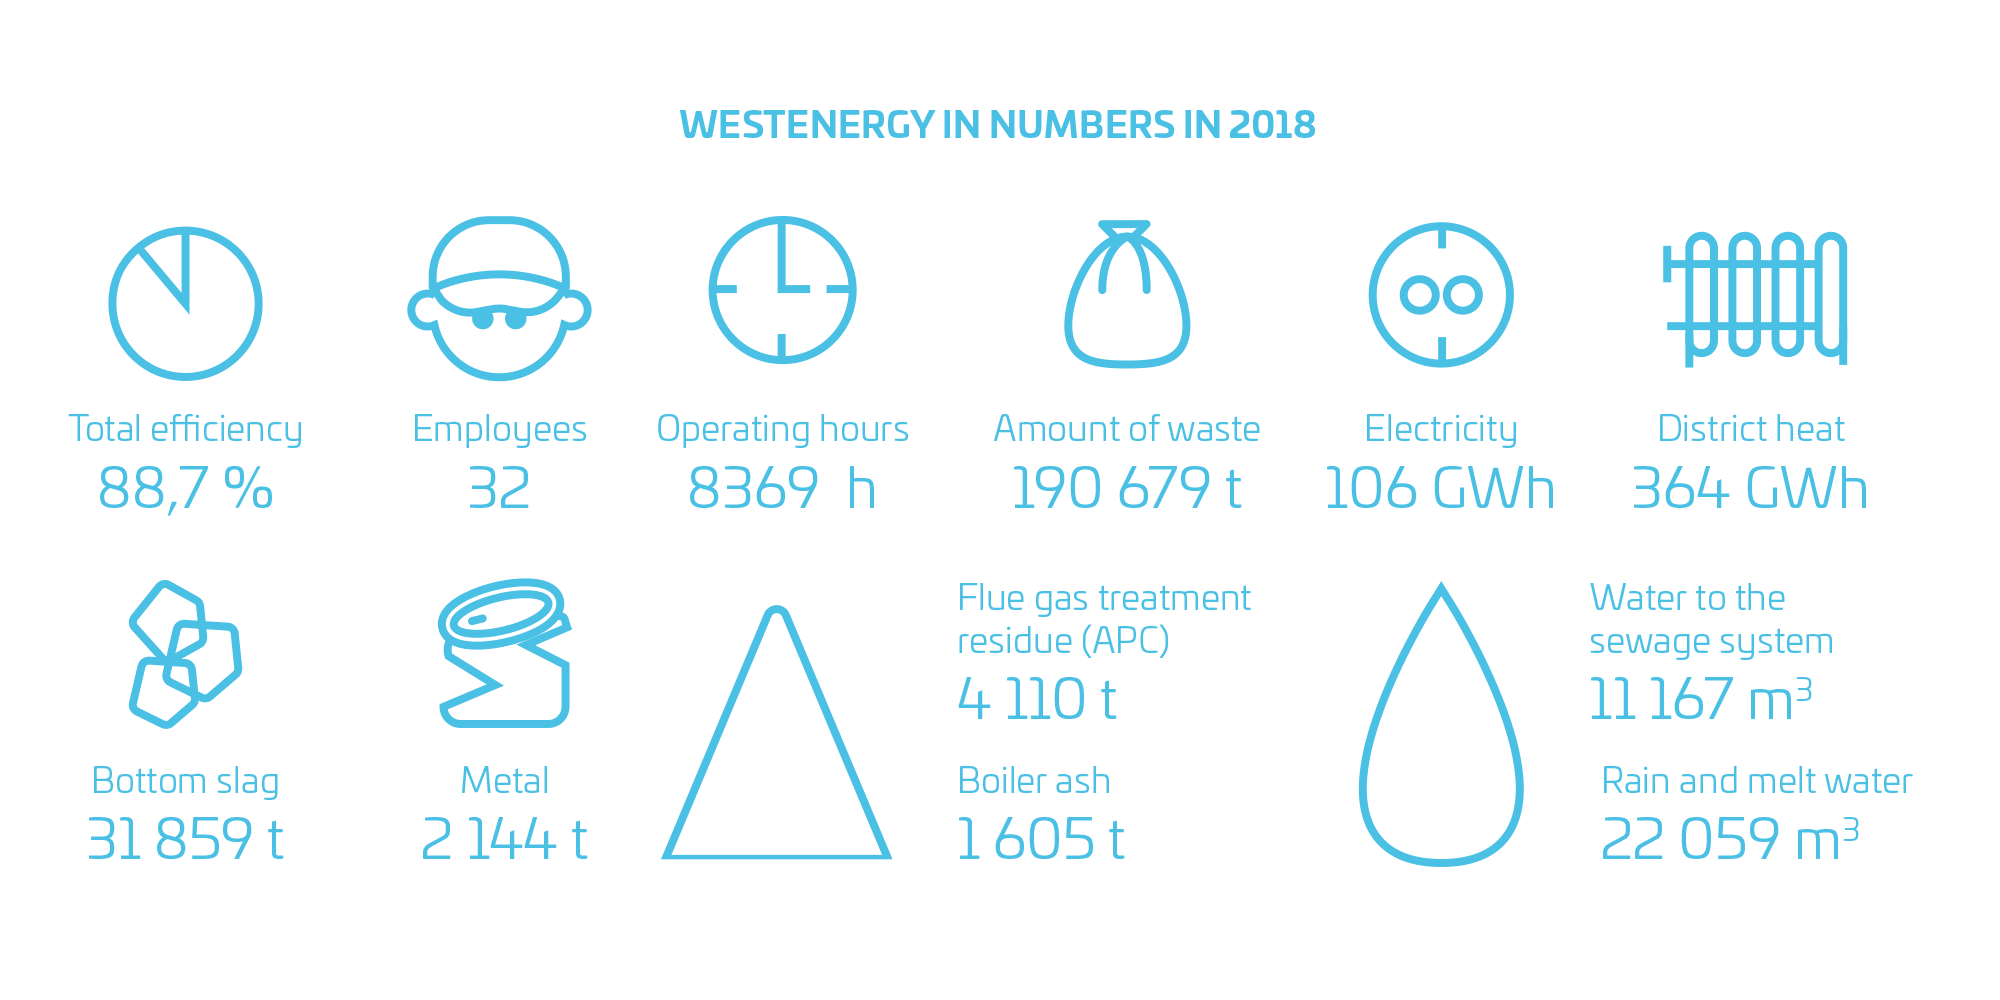 westenergy in numbers 2018